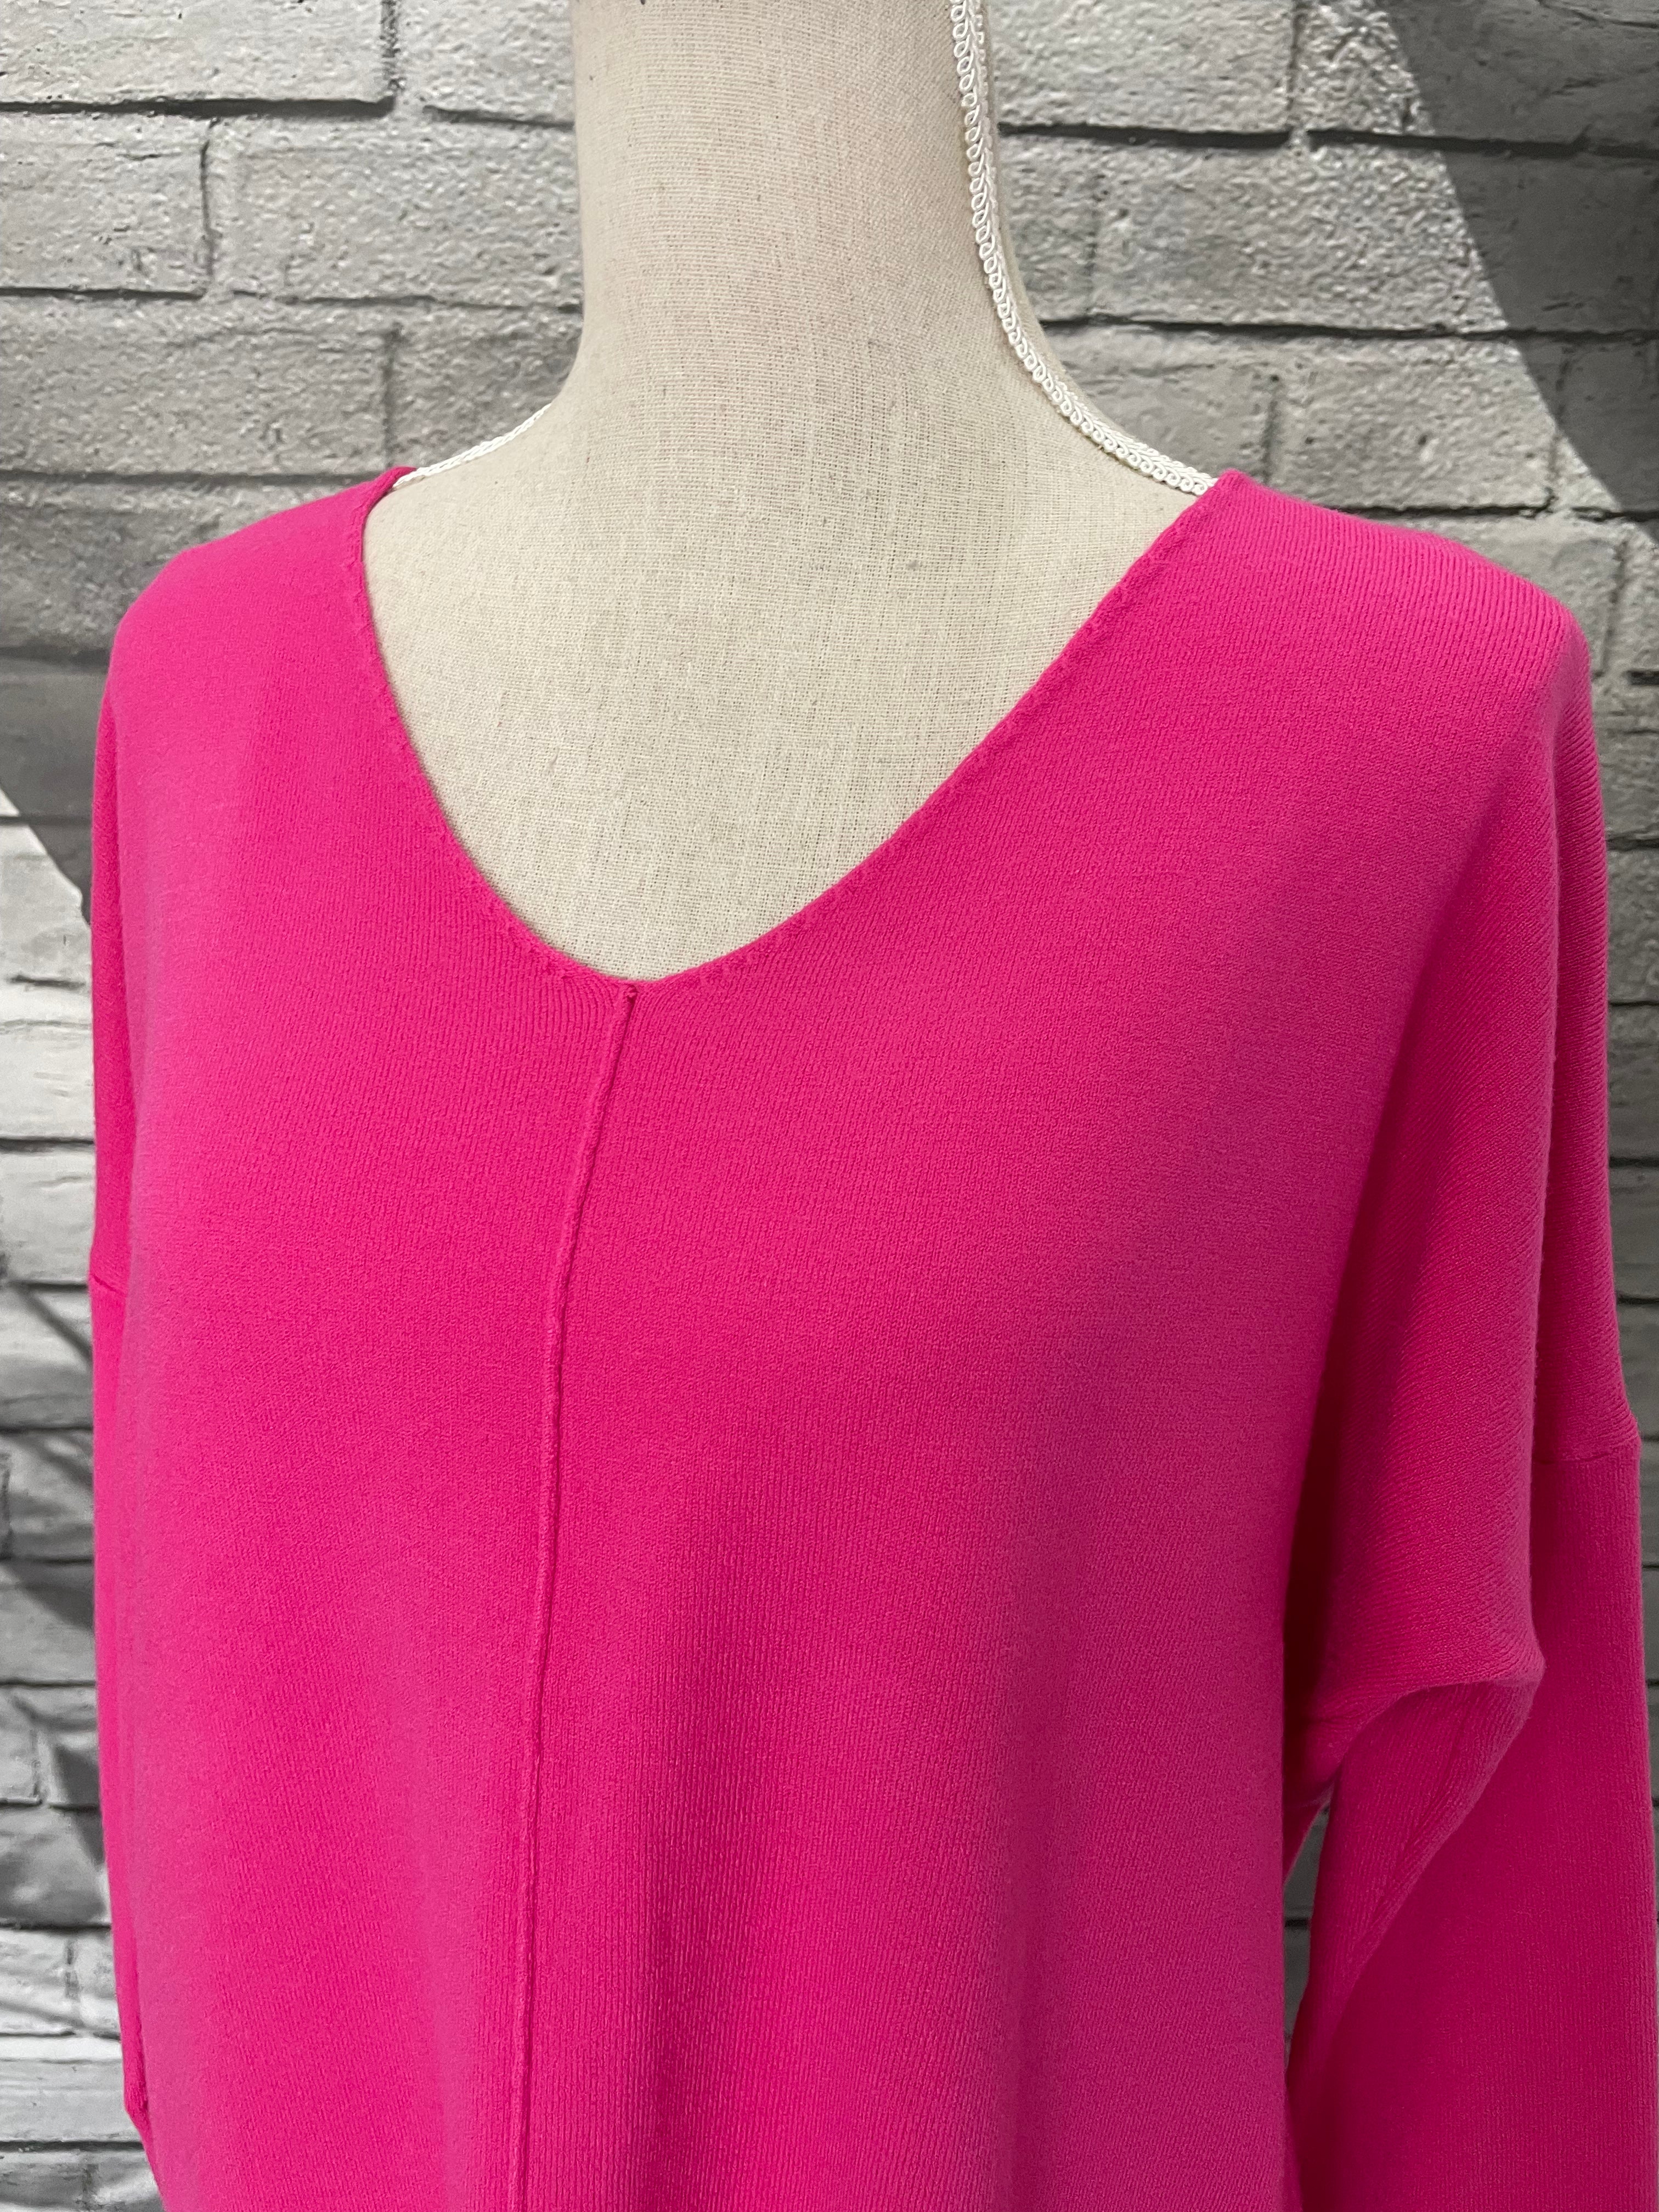 Dahlia Sweater Tunic in Hot Pink